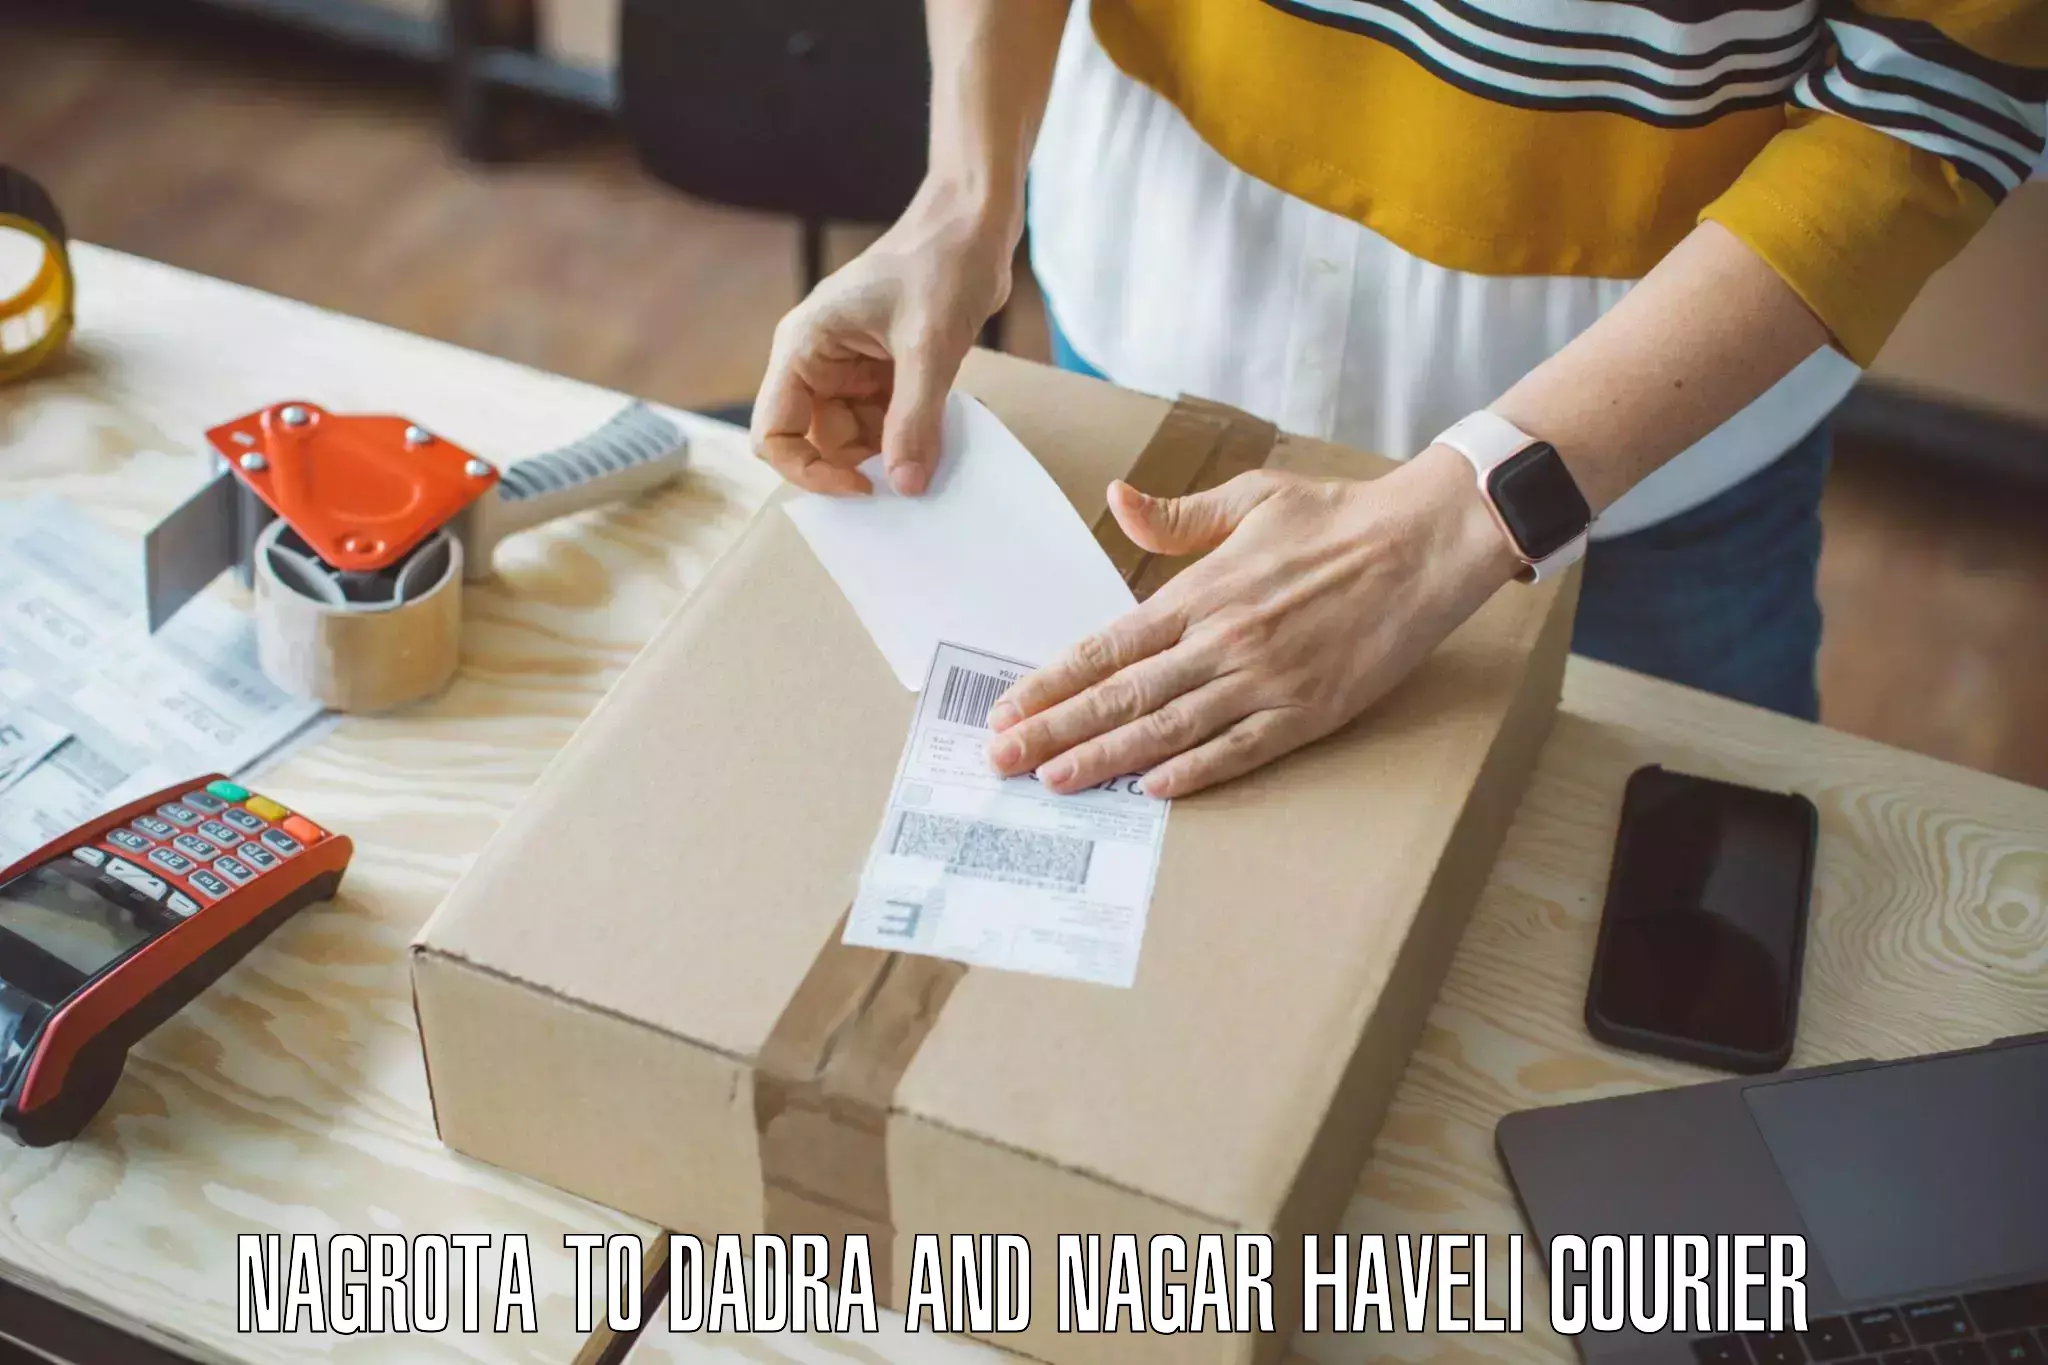 Furniture relocation experts Nagrota to Dadra and Nagar Haveli